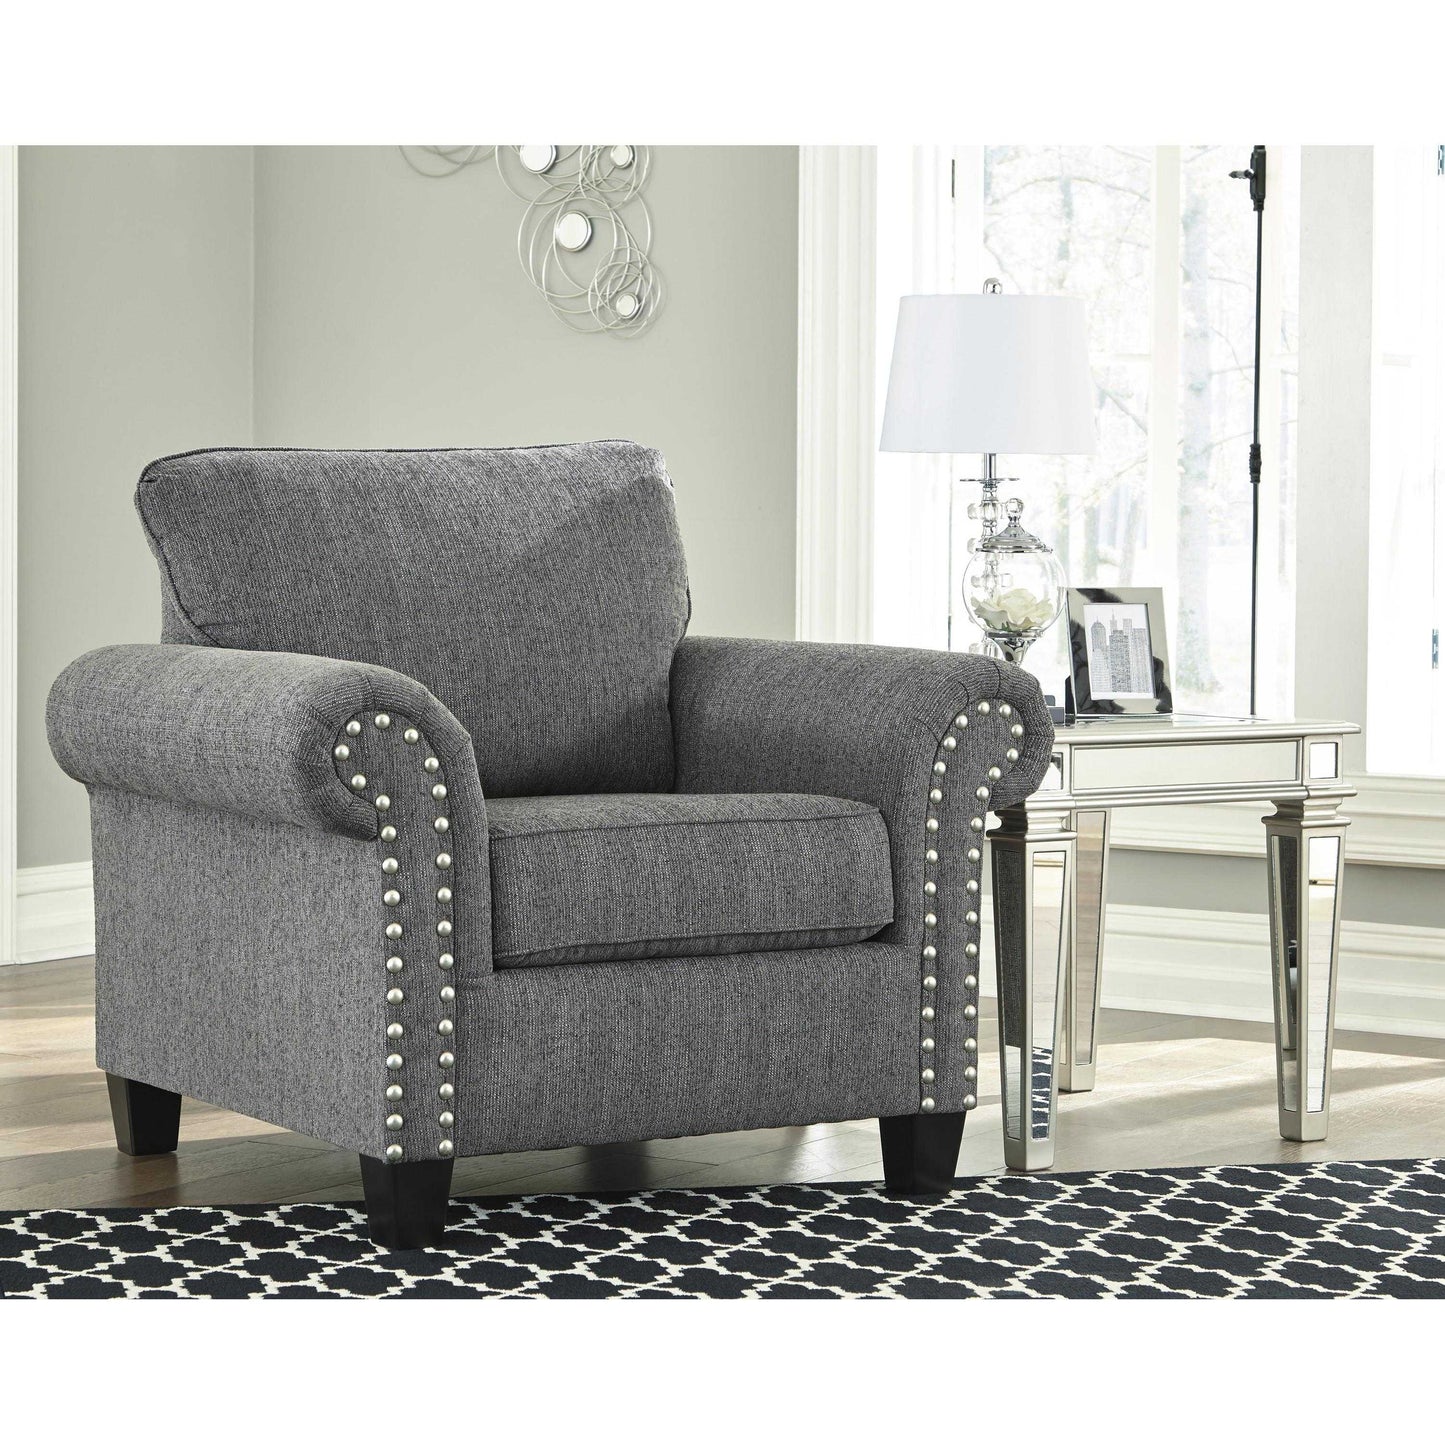 Benchcraft Agleno Stationary Fabric Chair 7870120